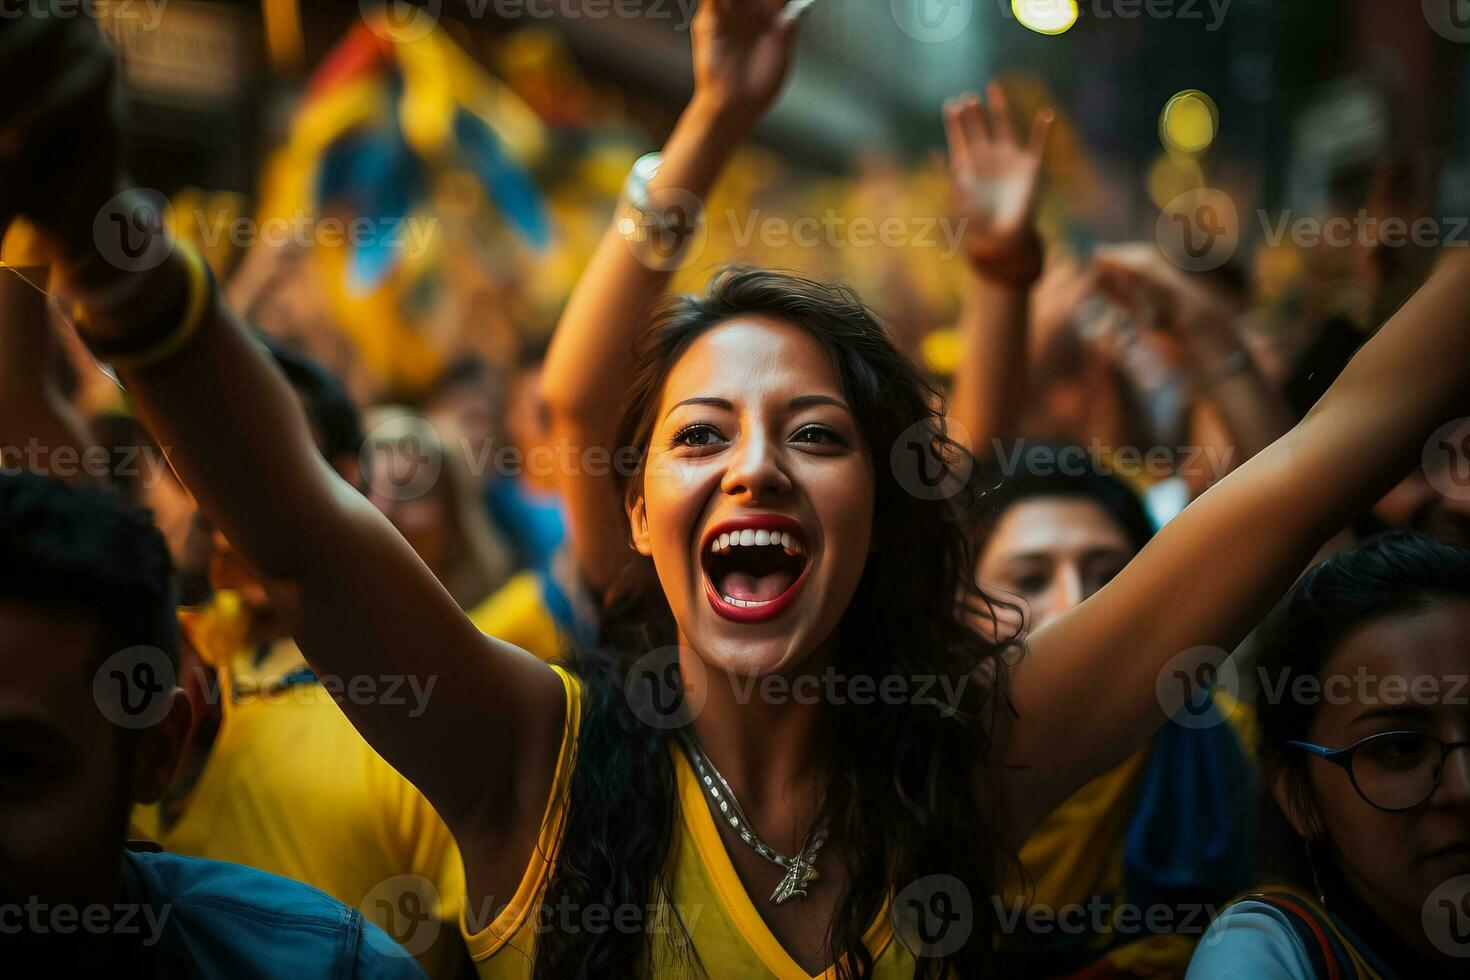 Ecuadorian football fans celebrating a victory photo